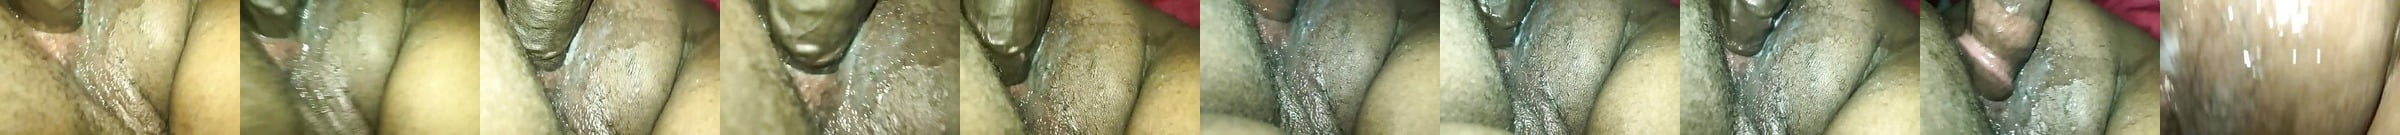 Itchy Asshole Bbc Remedy Free Pornhub Anal Hd Porn Bc Xhamster